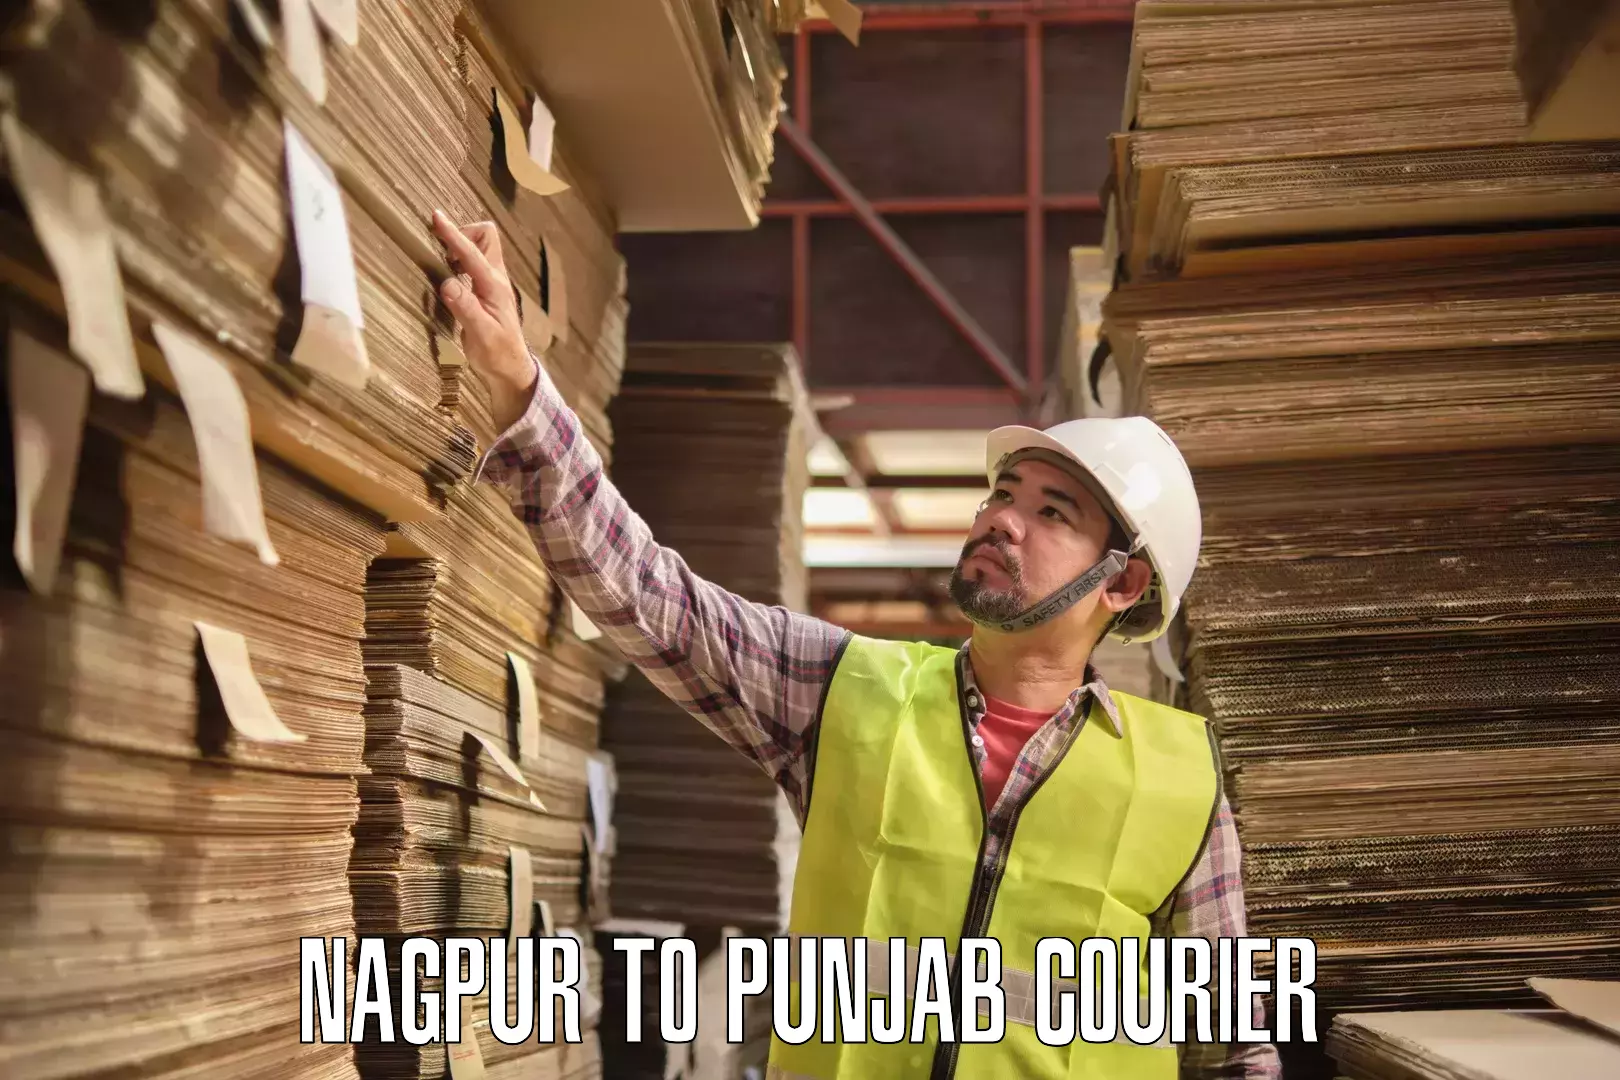 Quick booking process in Nagpur to Punjab